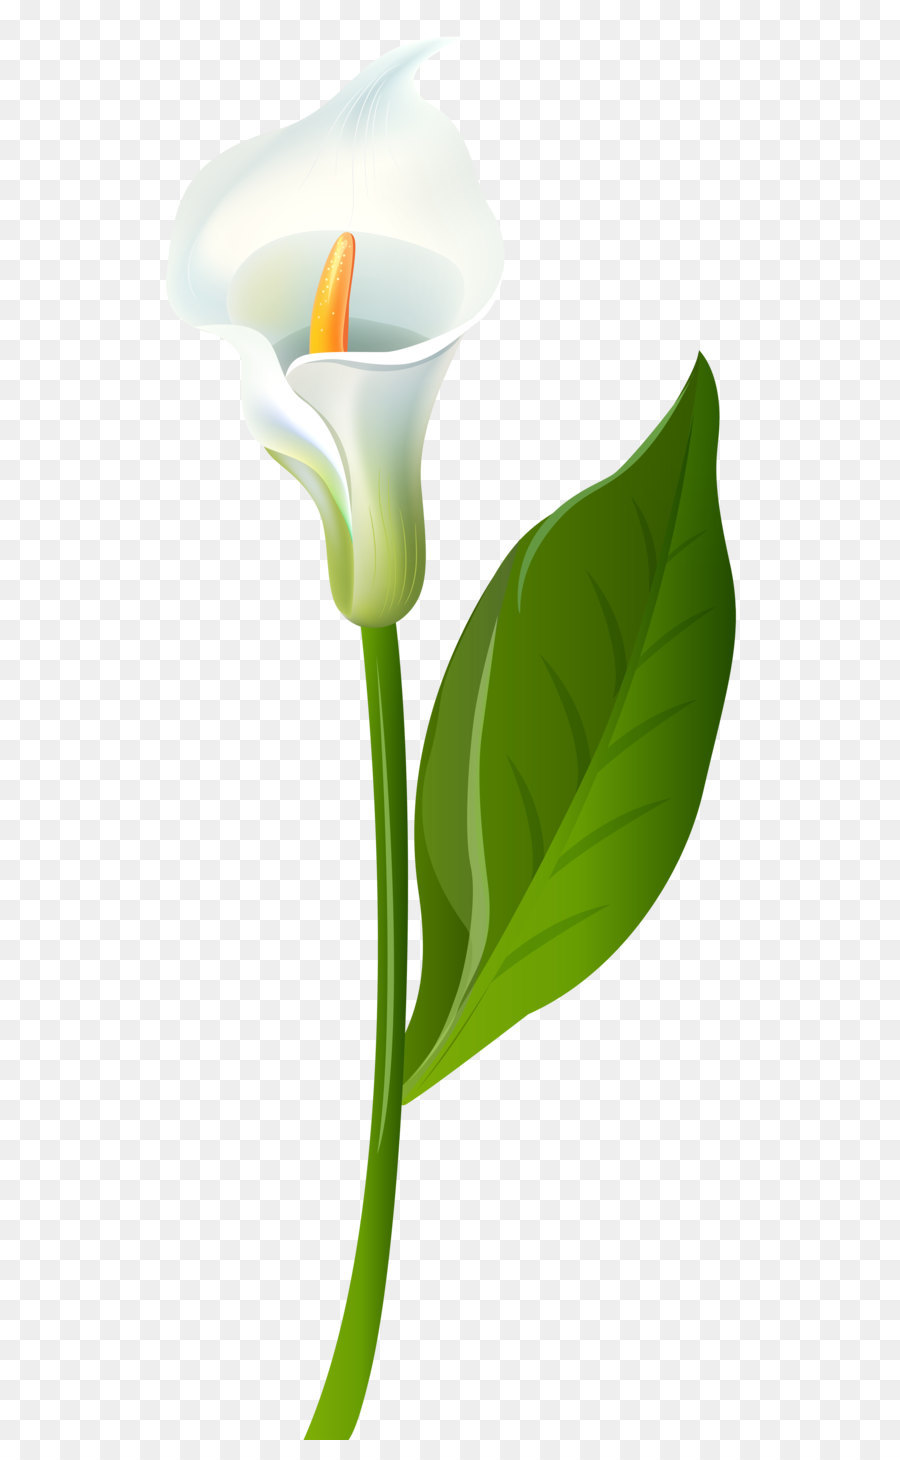 Leaf Flower Plant stem Green - Calla Lily Transparent PNG Clip Art Image png download - 3610*8000 - Free Transparent Leaf png Download.